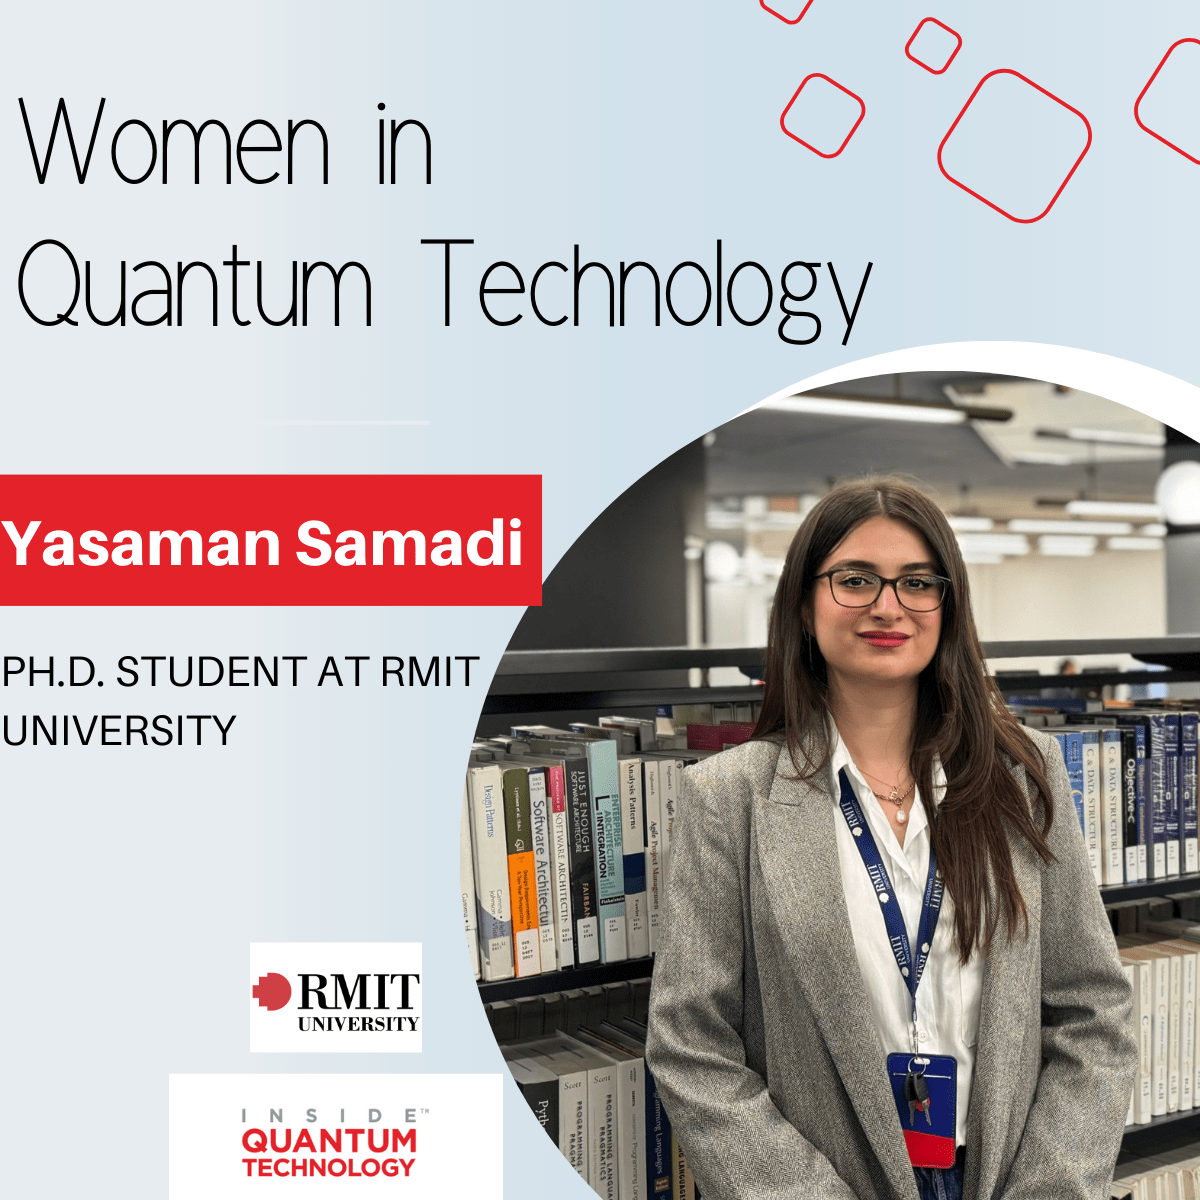 Mulheres da Tecnologia Quântica: Yasaman Samadi da Universidade RMIT - Inside Quantum Technology